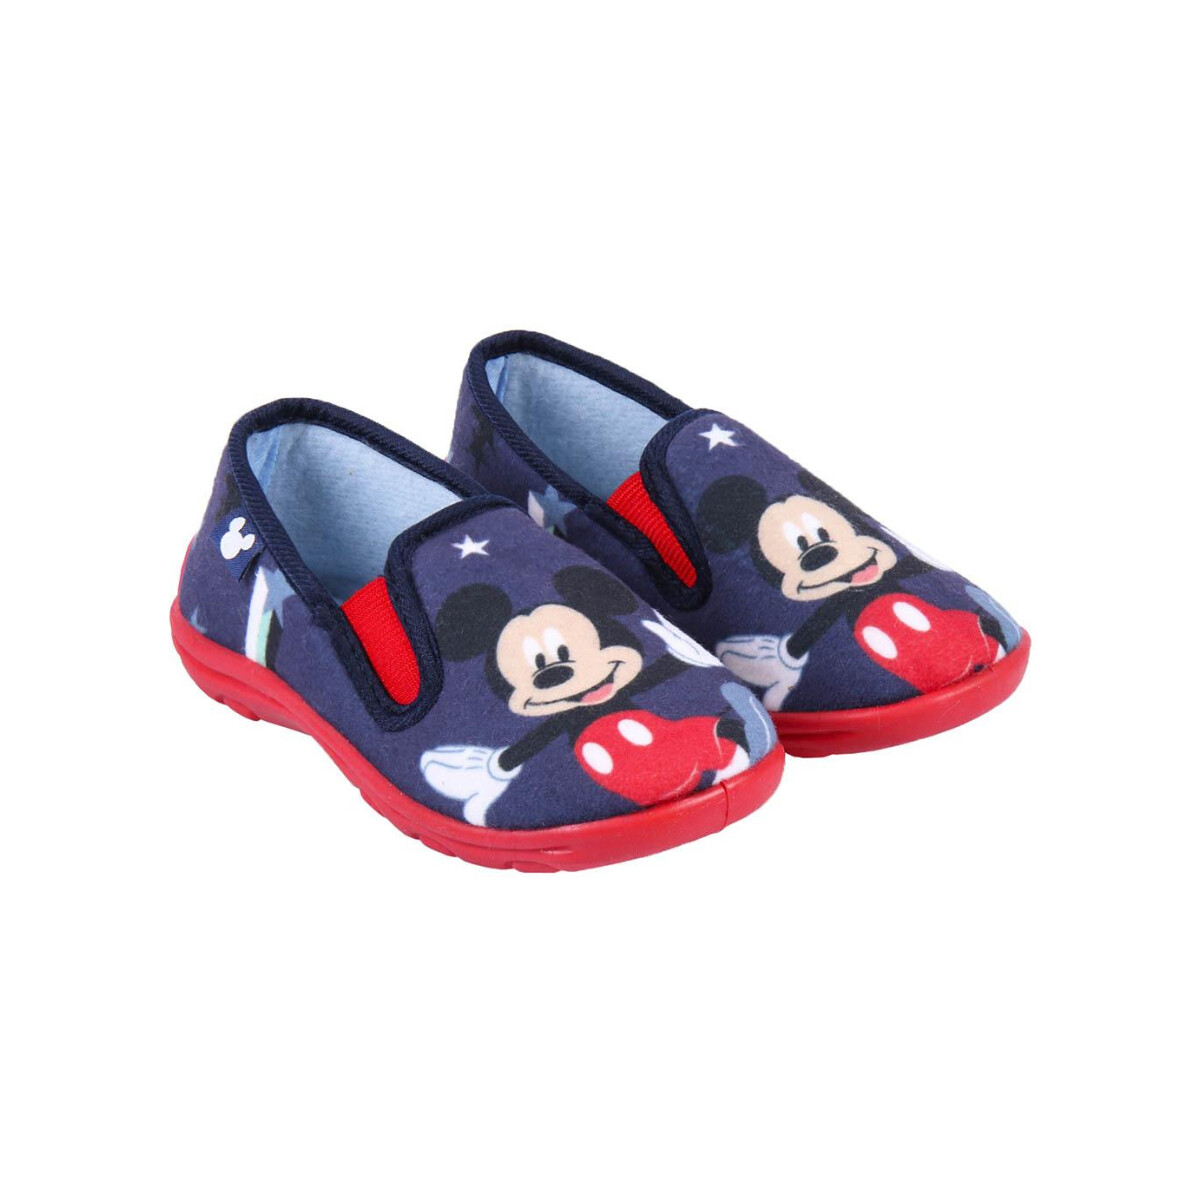 Zapatos Niño Pantuflas Disney 2300004897 Azul